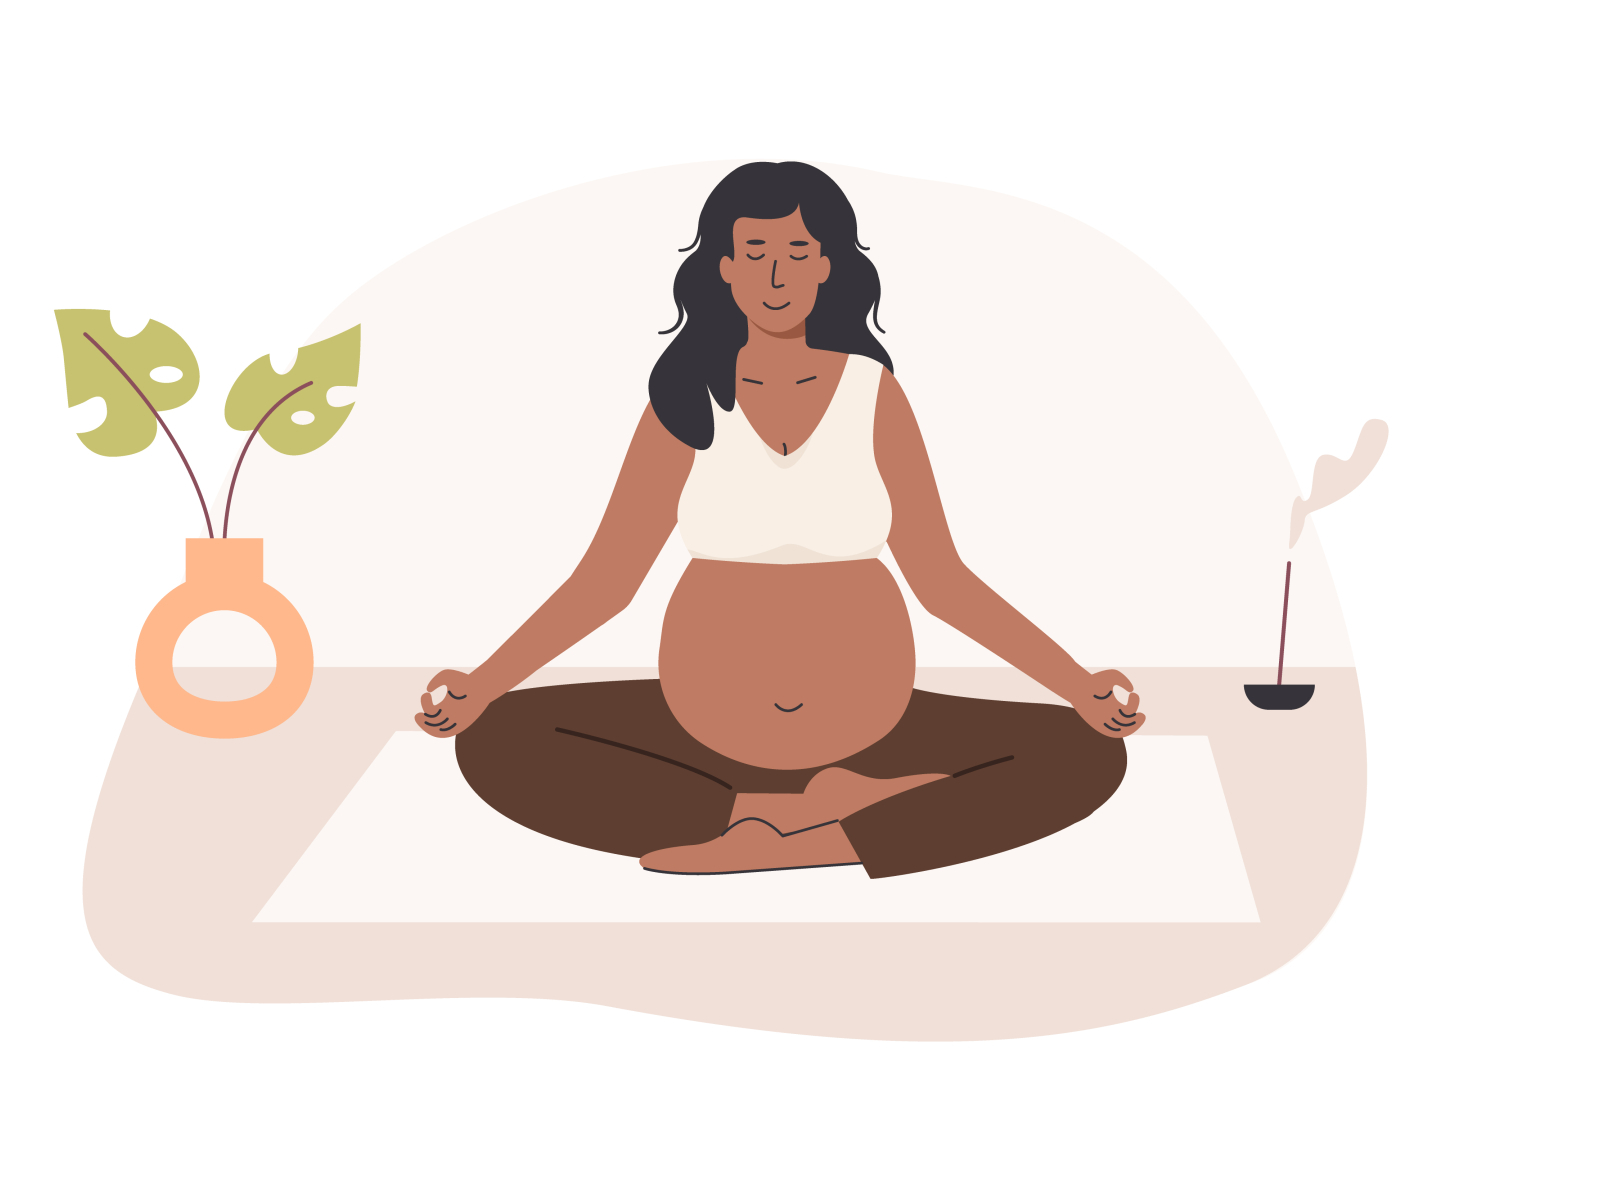 Prenatal Yoga & Meditation by Inna Miller on Dribbble